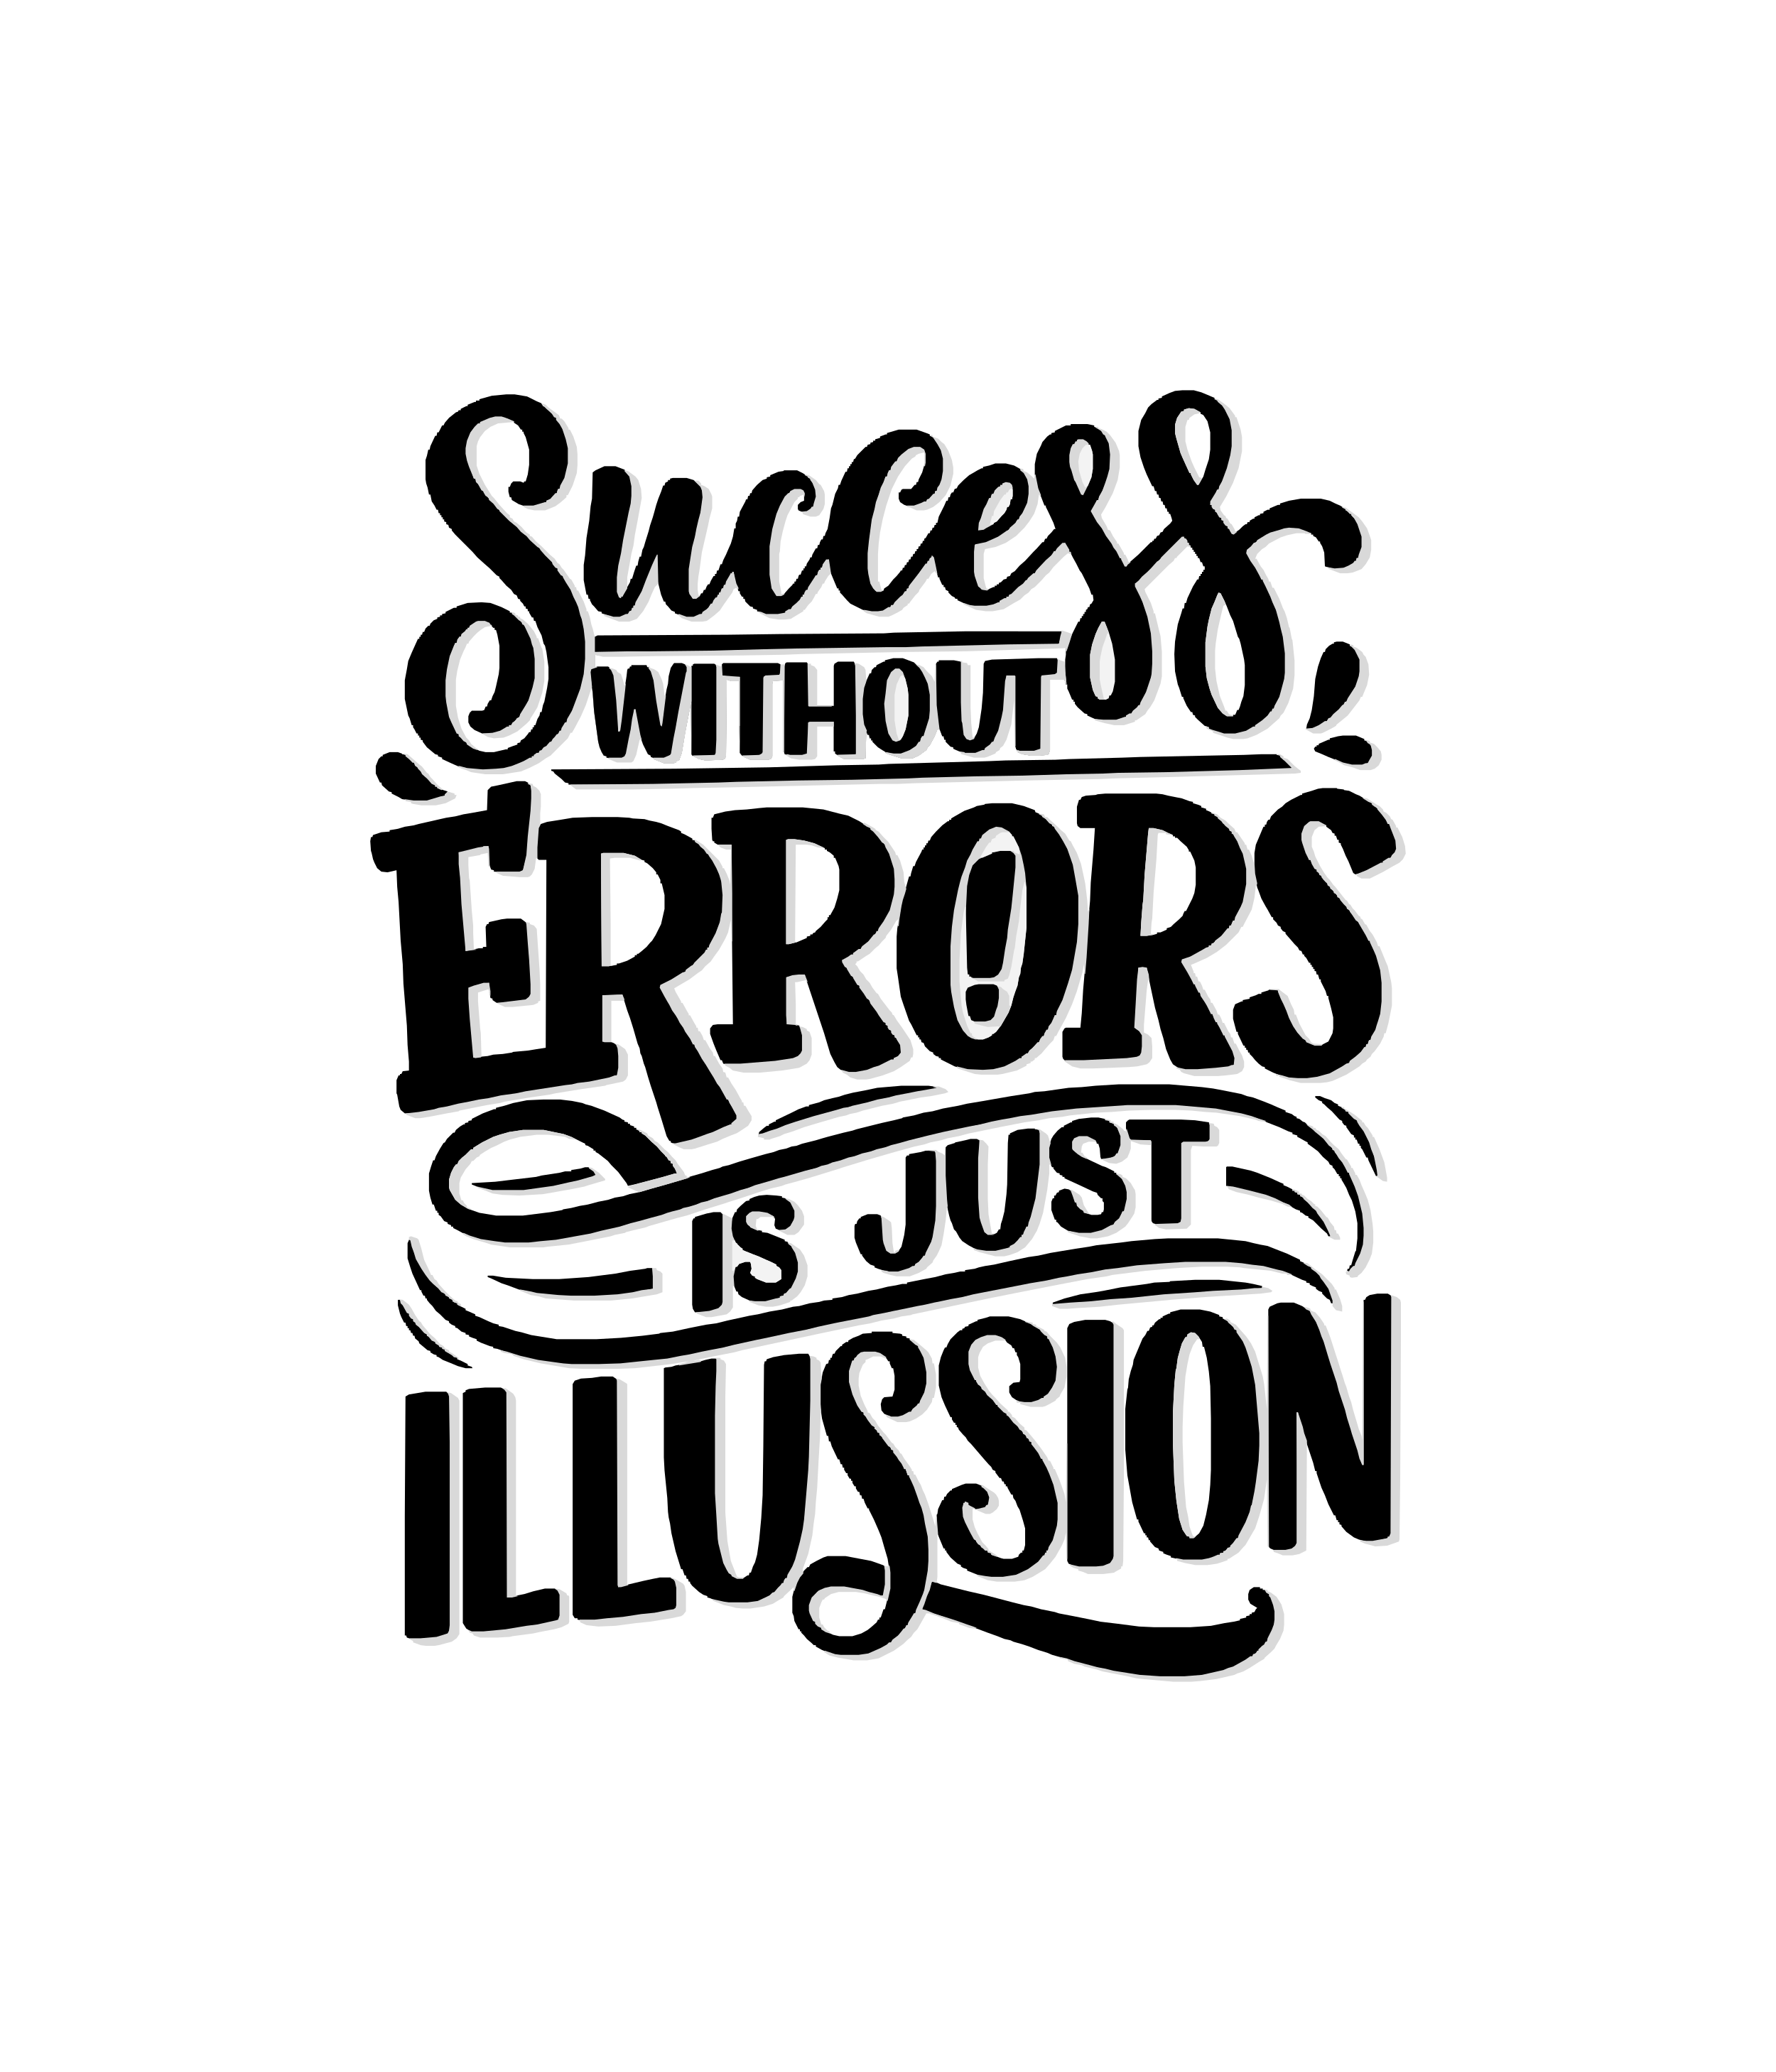 Success Without Errors - Original image